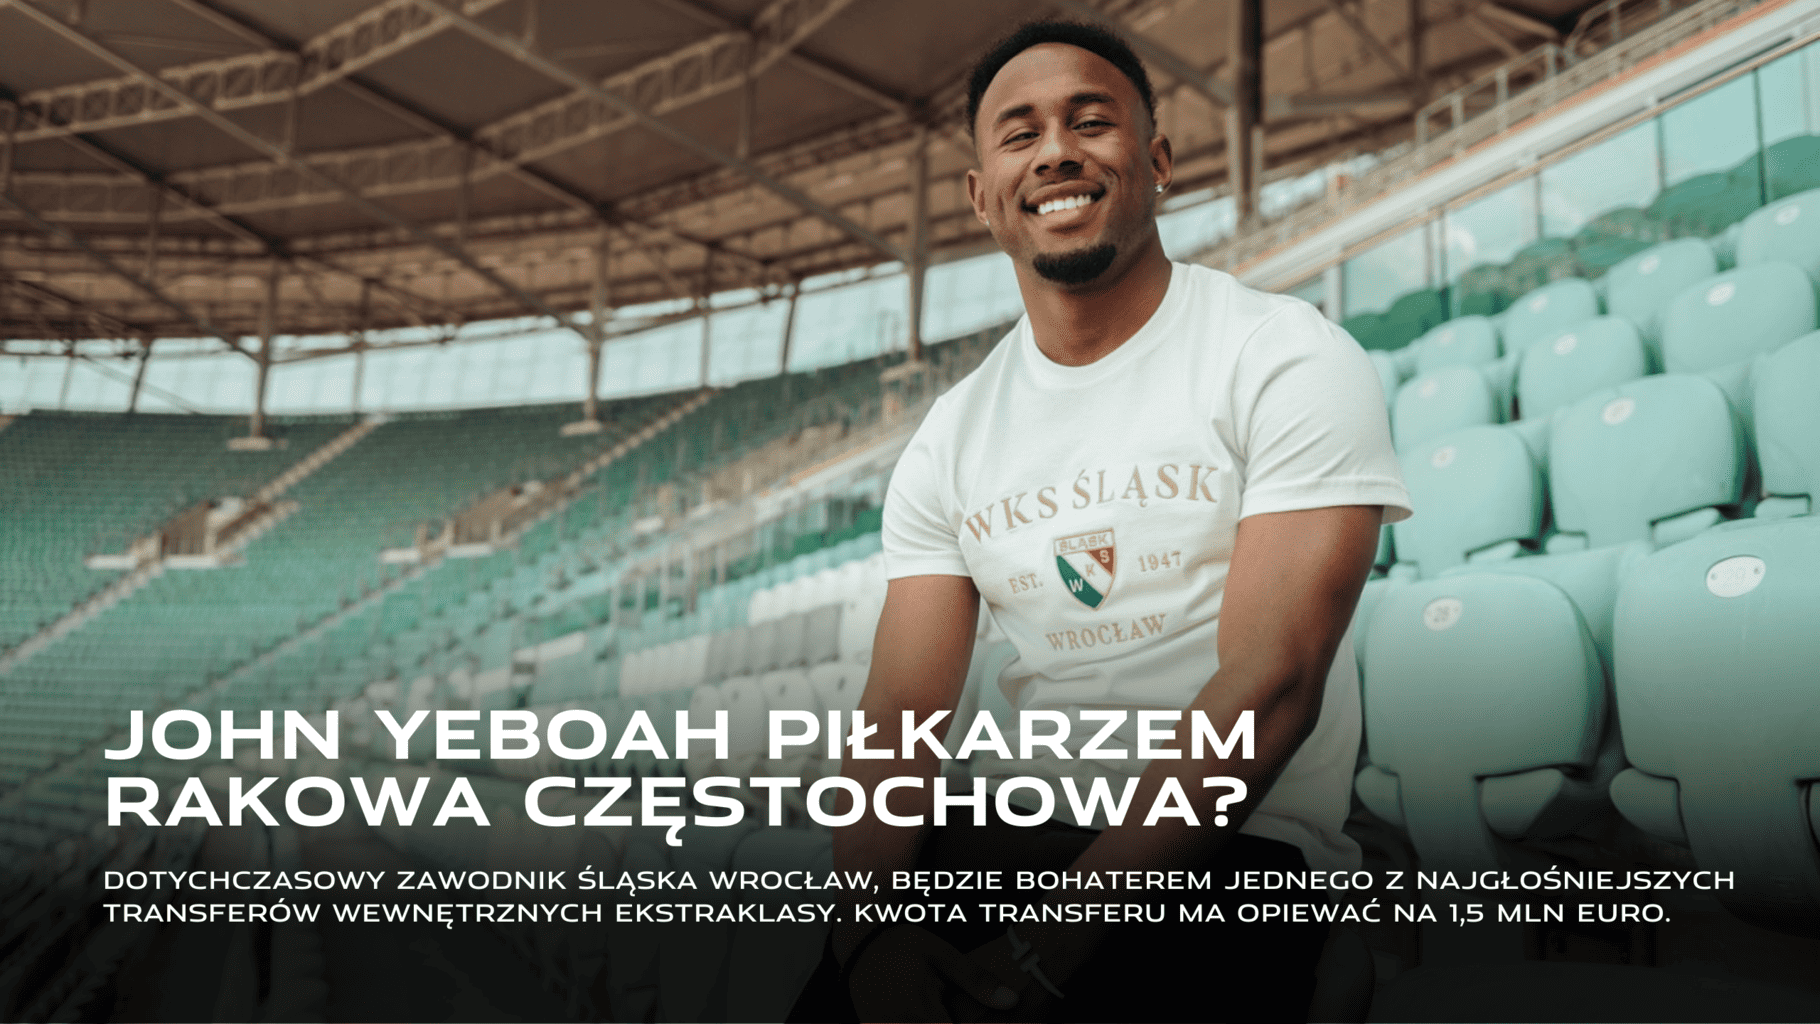 John Yeboah transfer do Rakowa Częstochowa 1,5 mln euro